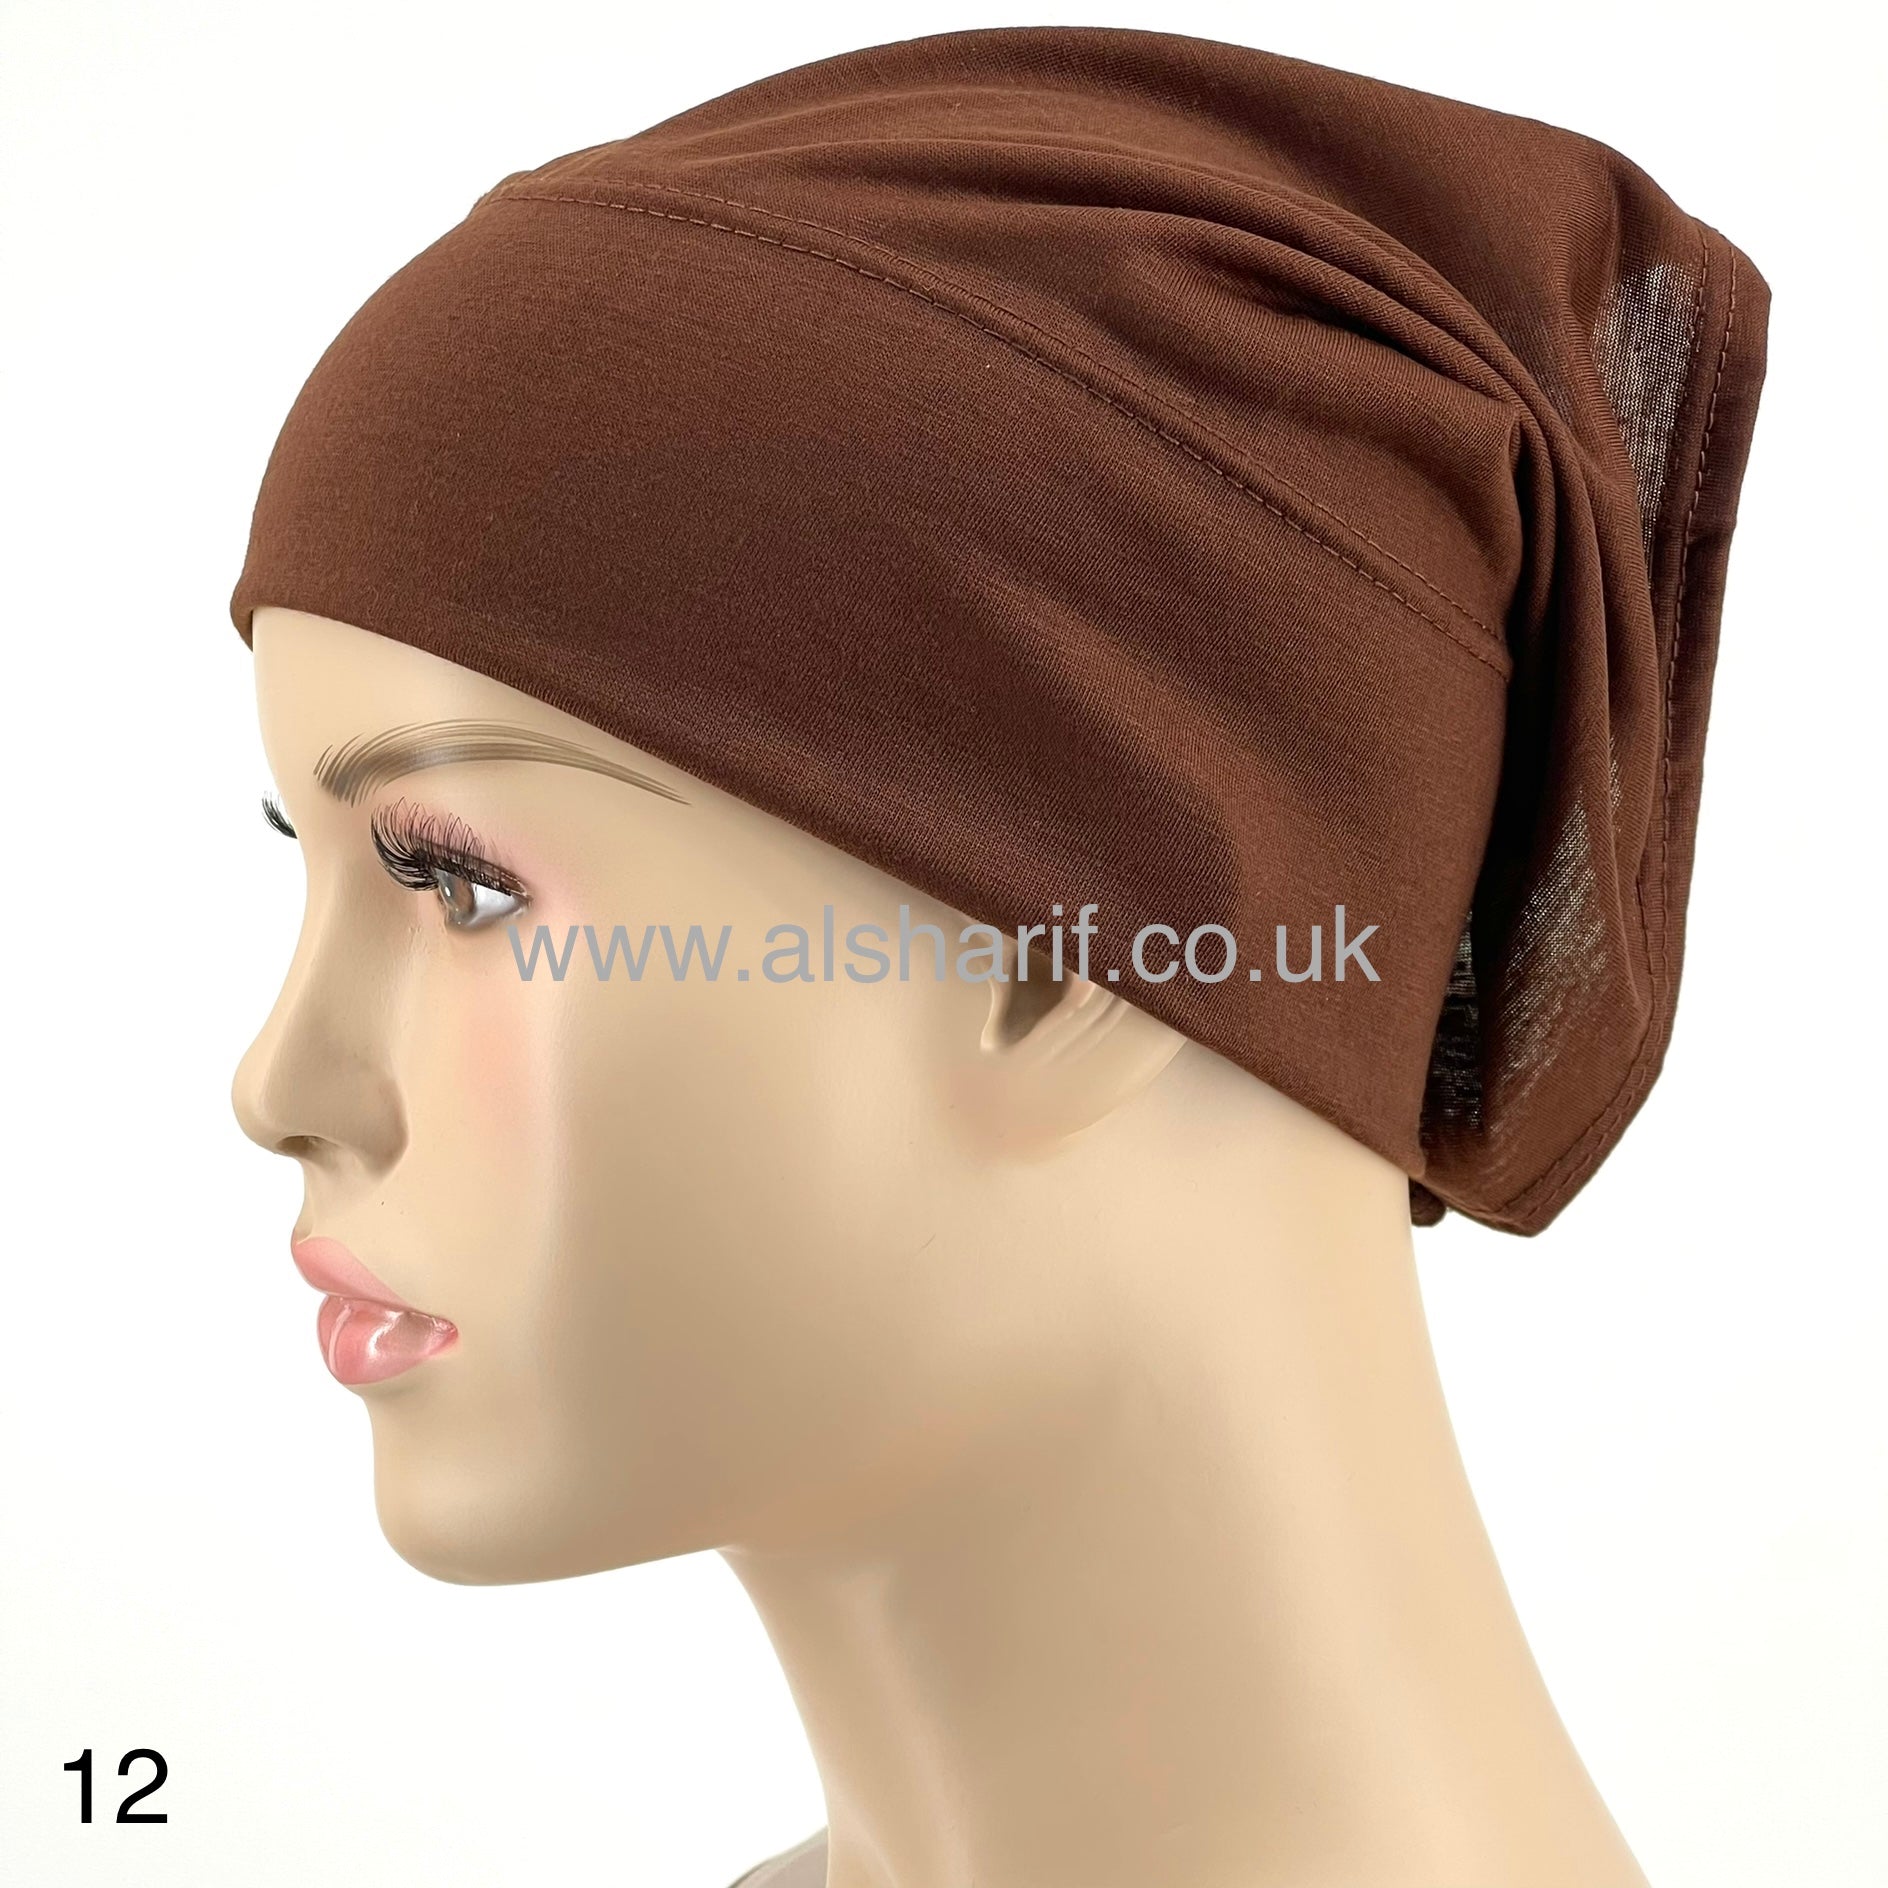 Under Hijab Tube Bonnet Cap #12